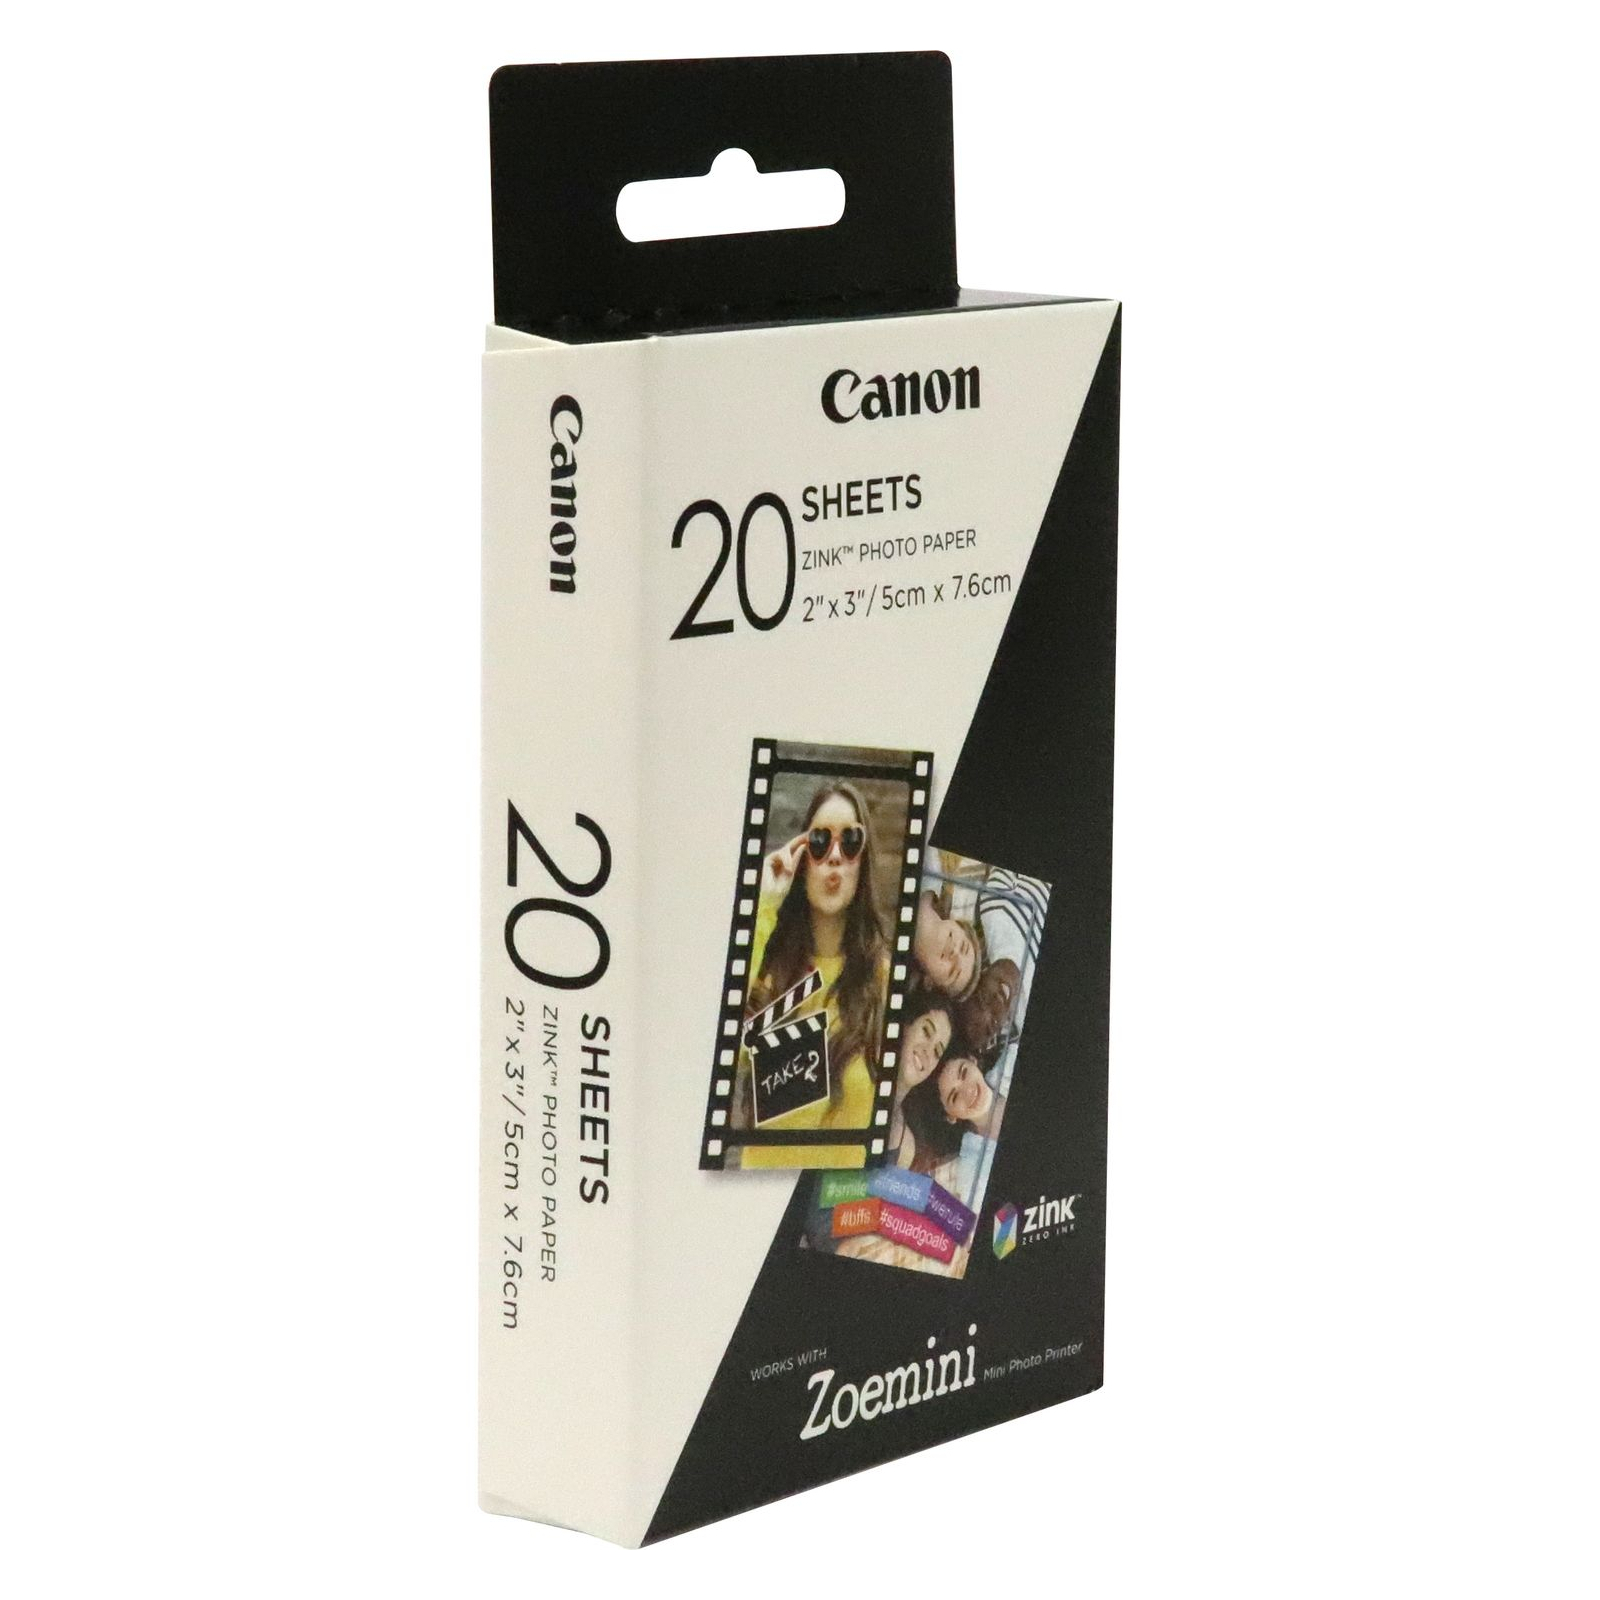 Фотопапір Canon 2"x3" ZINK™ ZP-2030 20s (3214C002) зображення 2